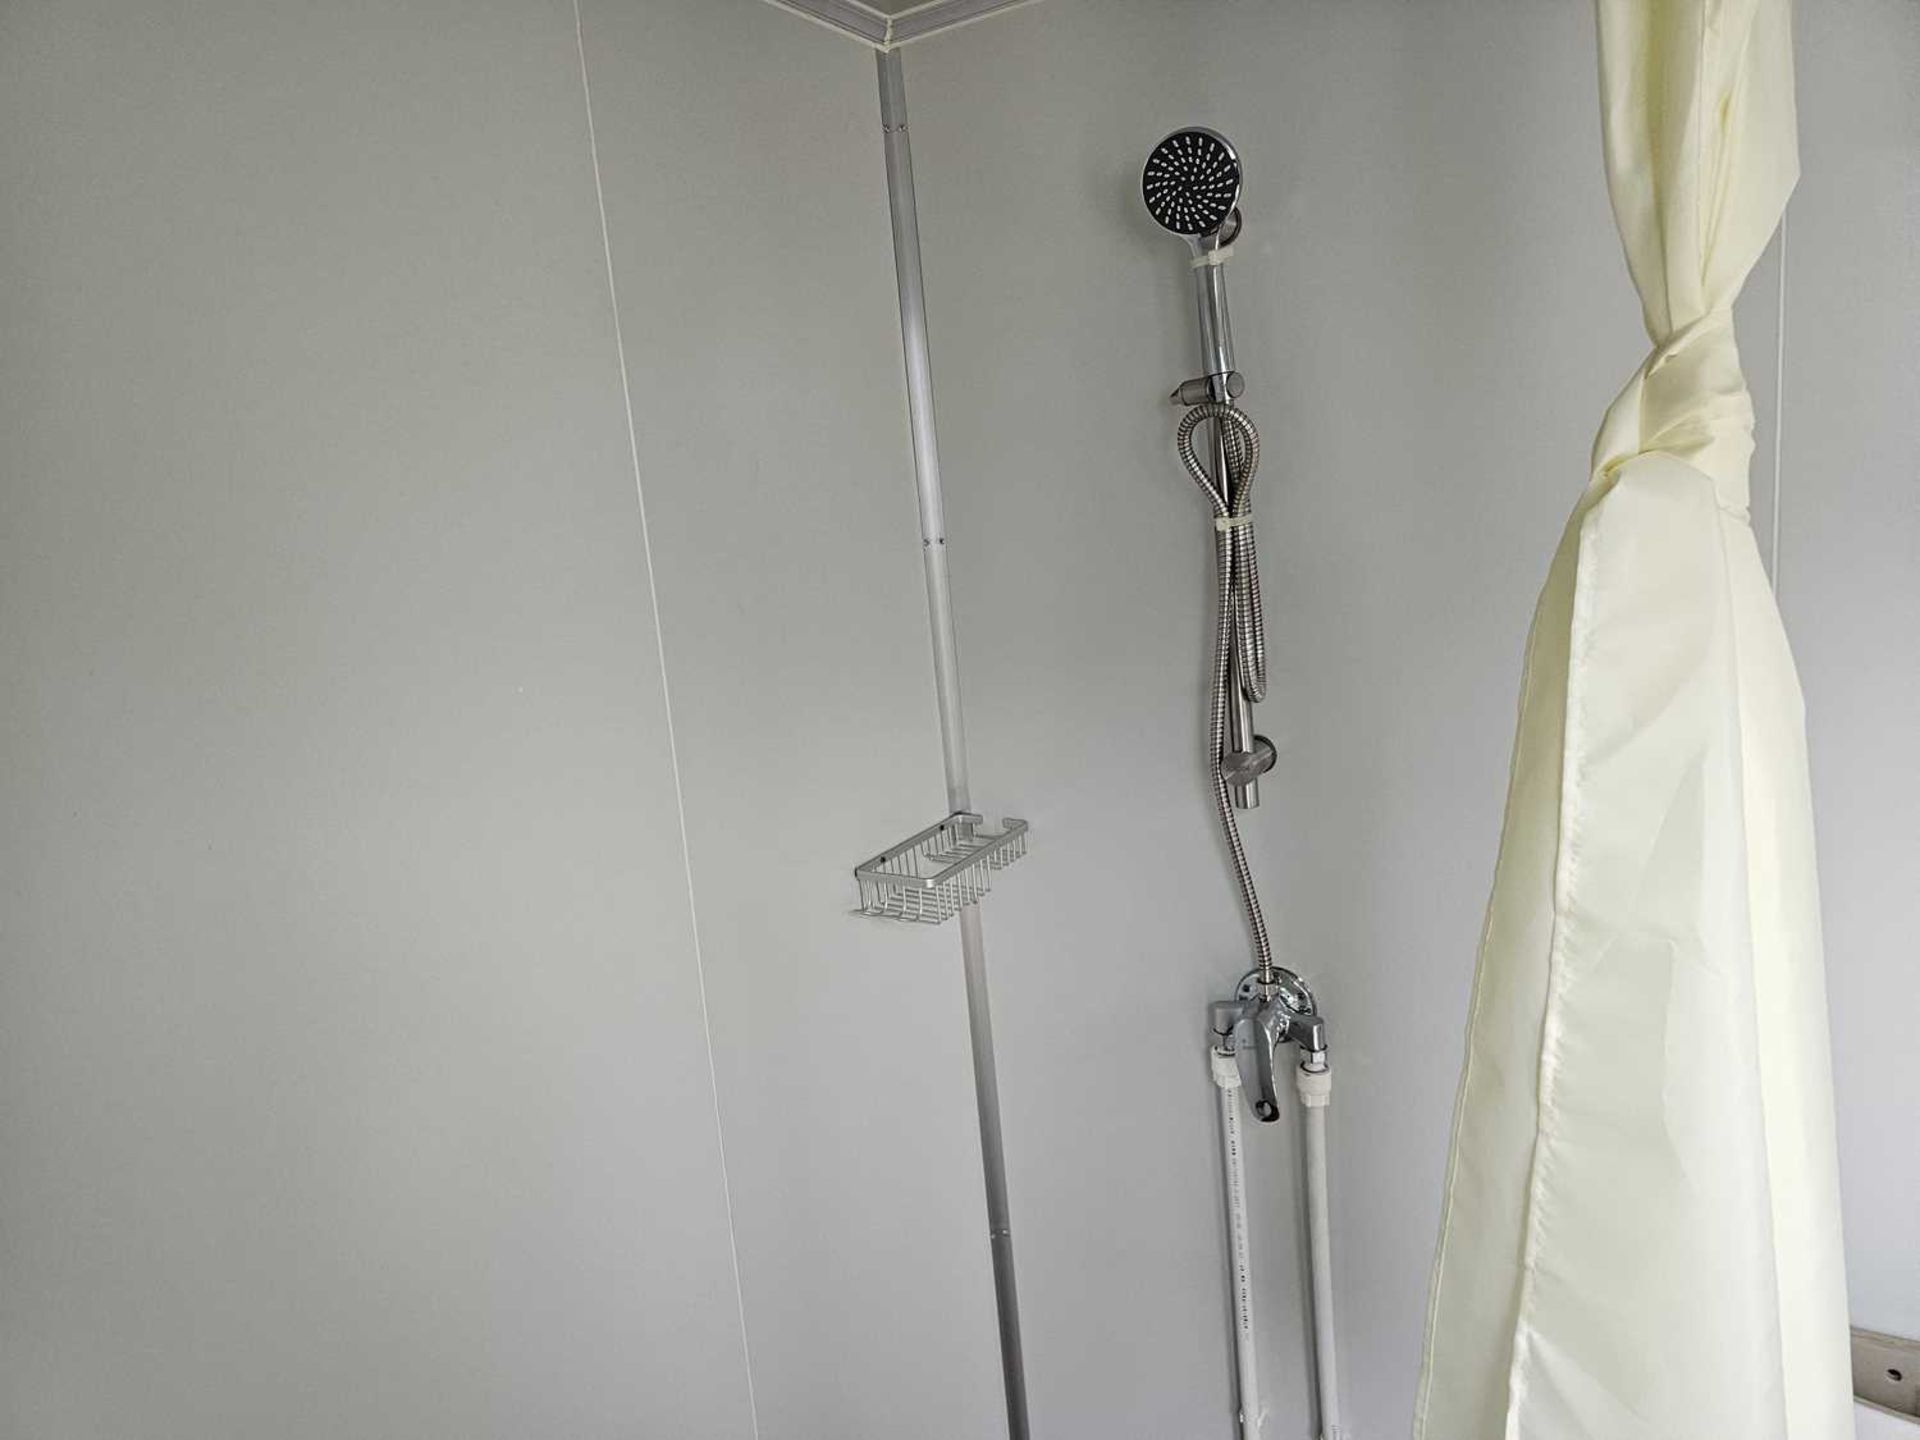 Unused Bastone Shower & Toilet Block (W2.16m x L1.6m x H2.4m) - Image 7 of 8